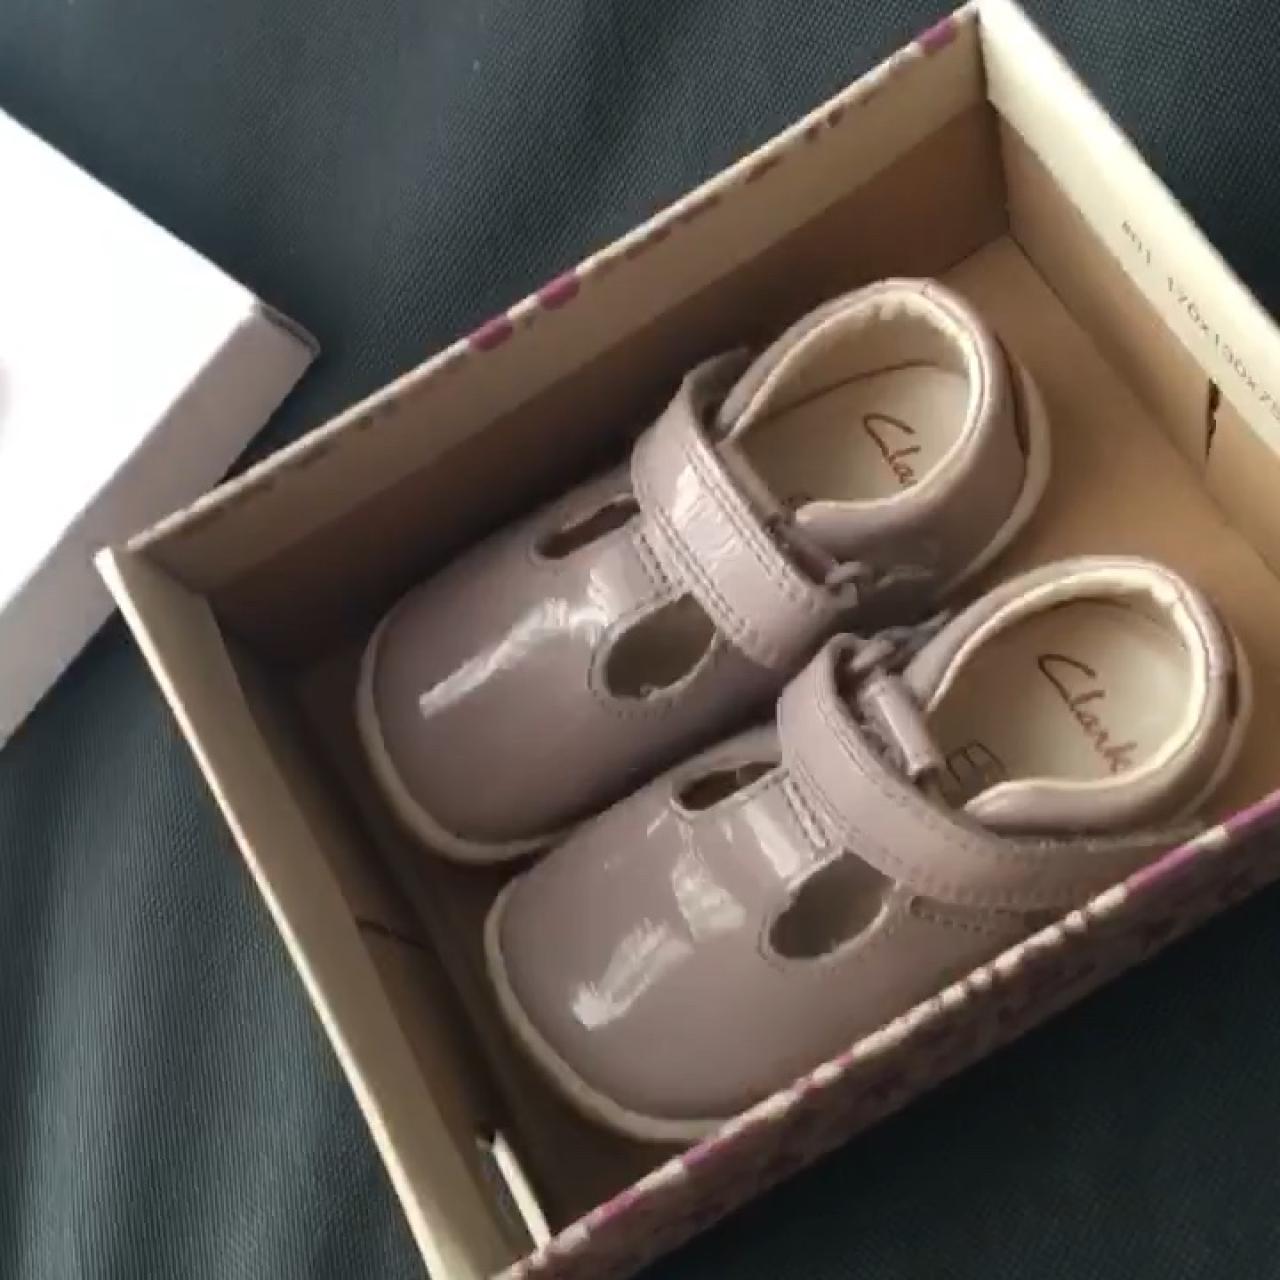 baby roamer shoes